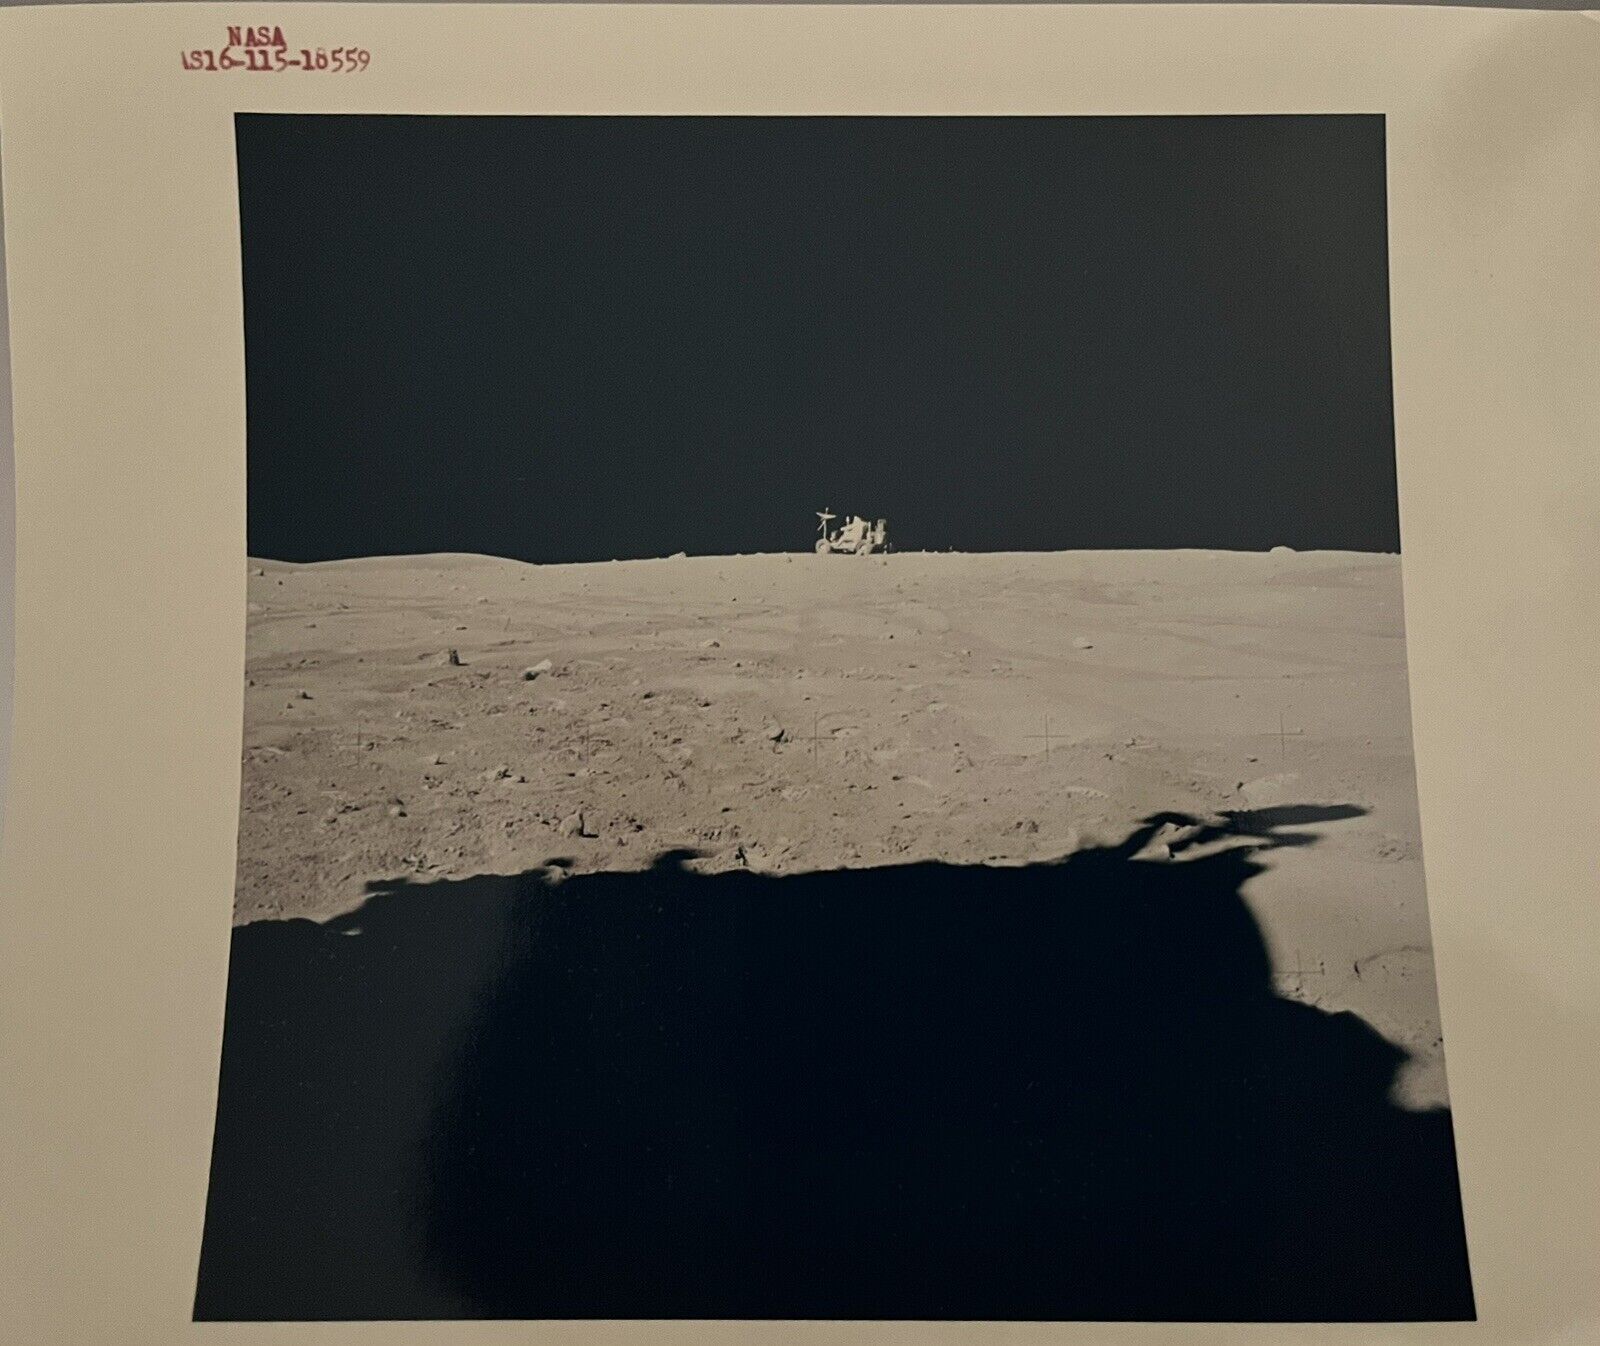 nasa red number photo Apollo 16 On Moon.